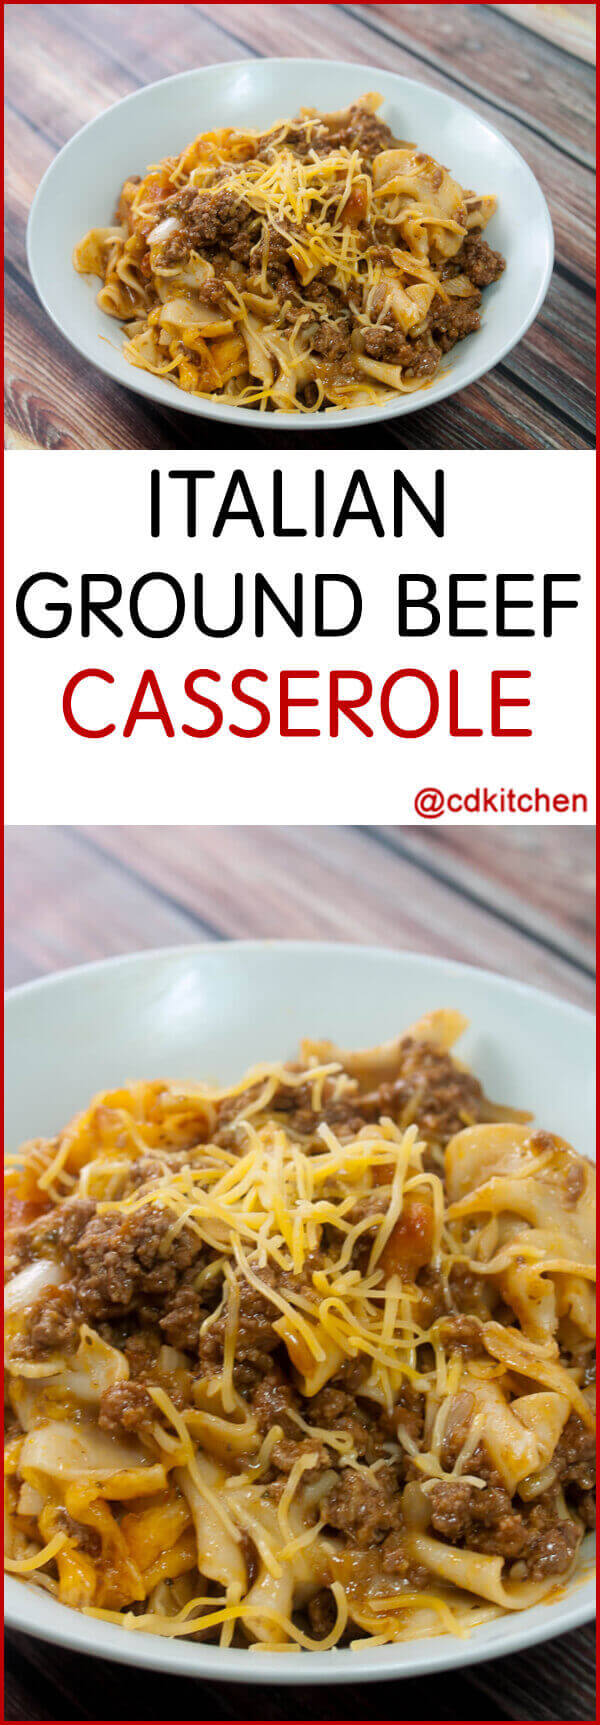 Italian Ground Beef Casserole Recipe | CDKitchen.com